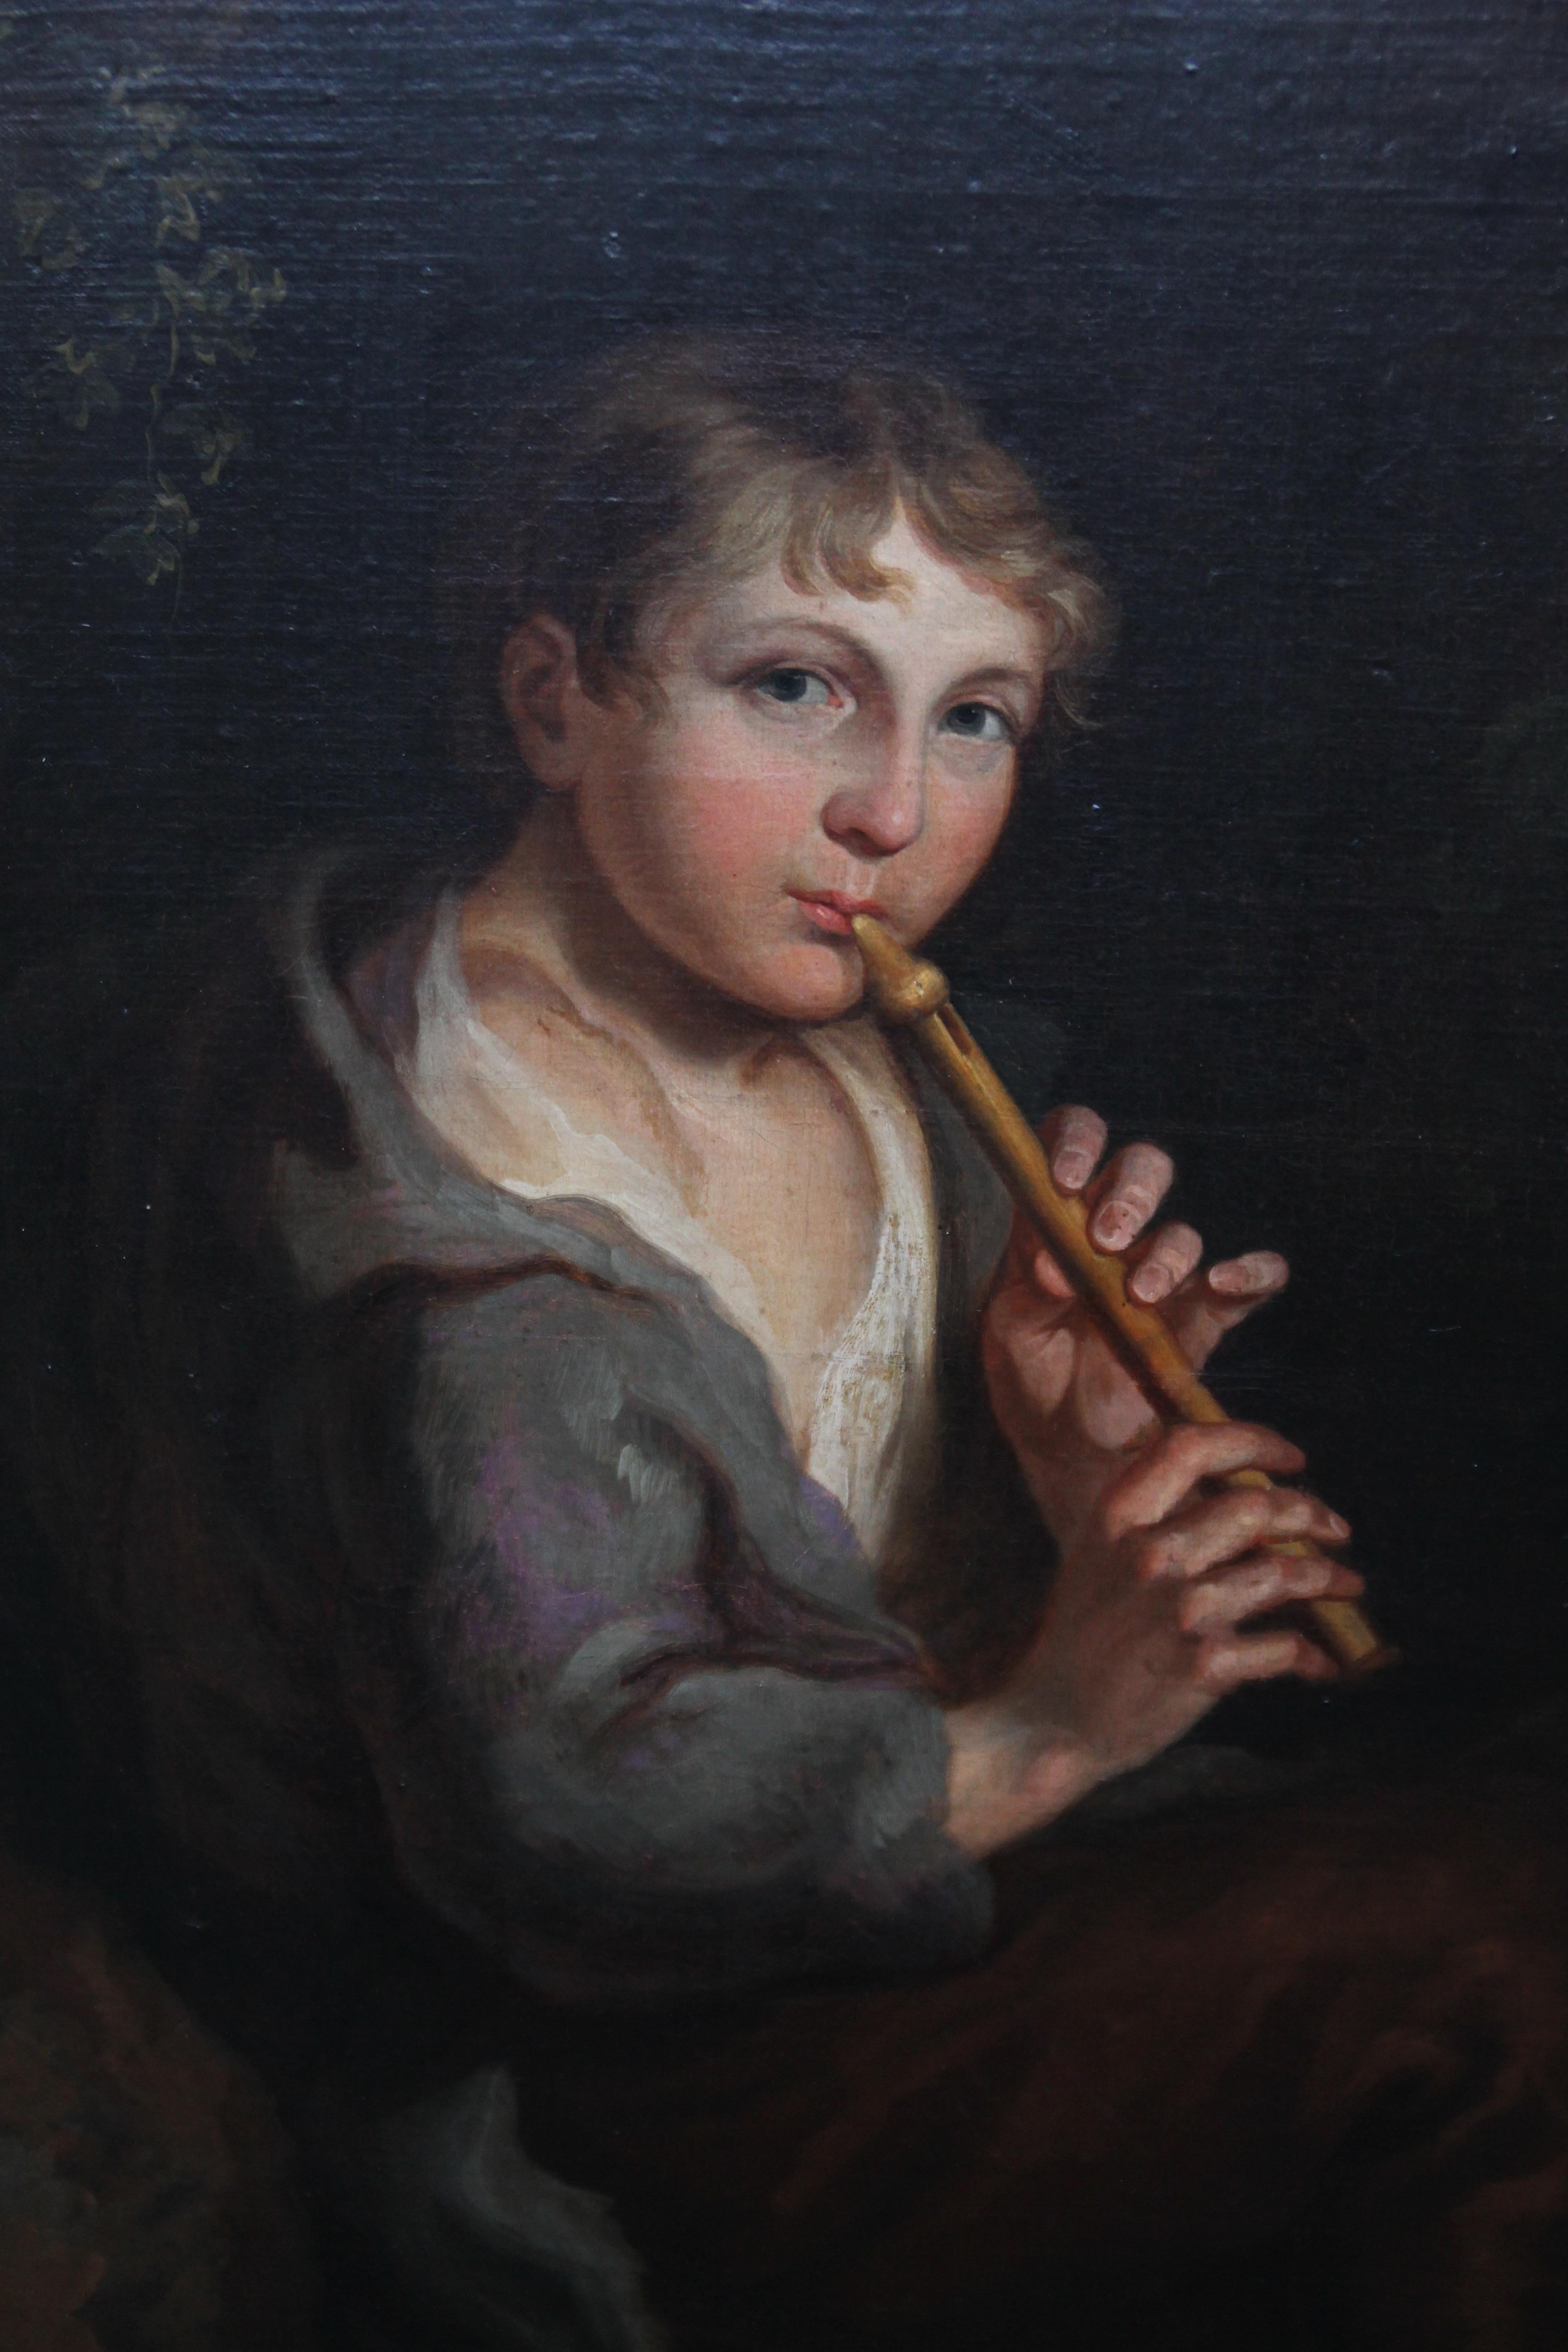 thomas the 18th century boy